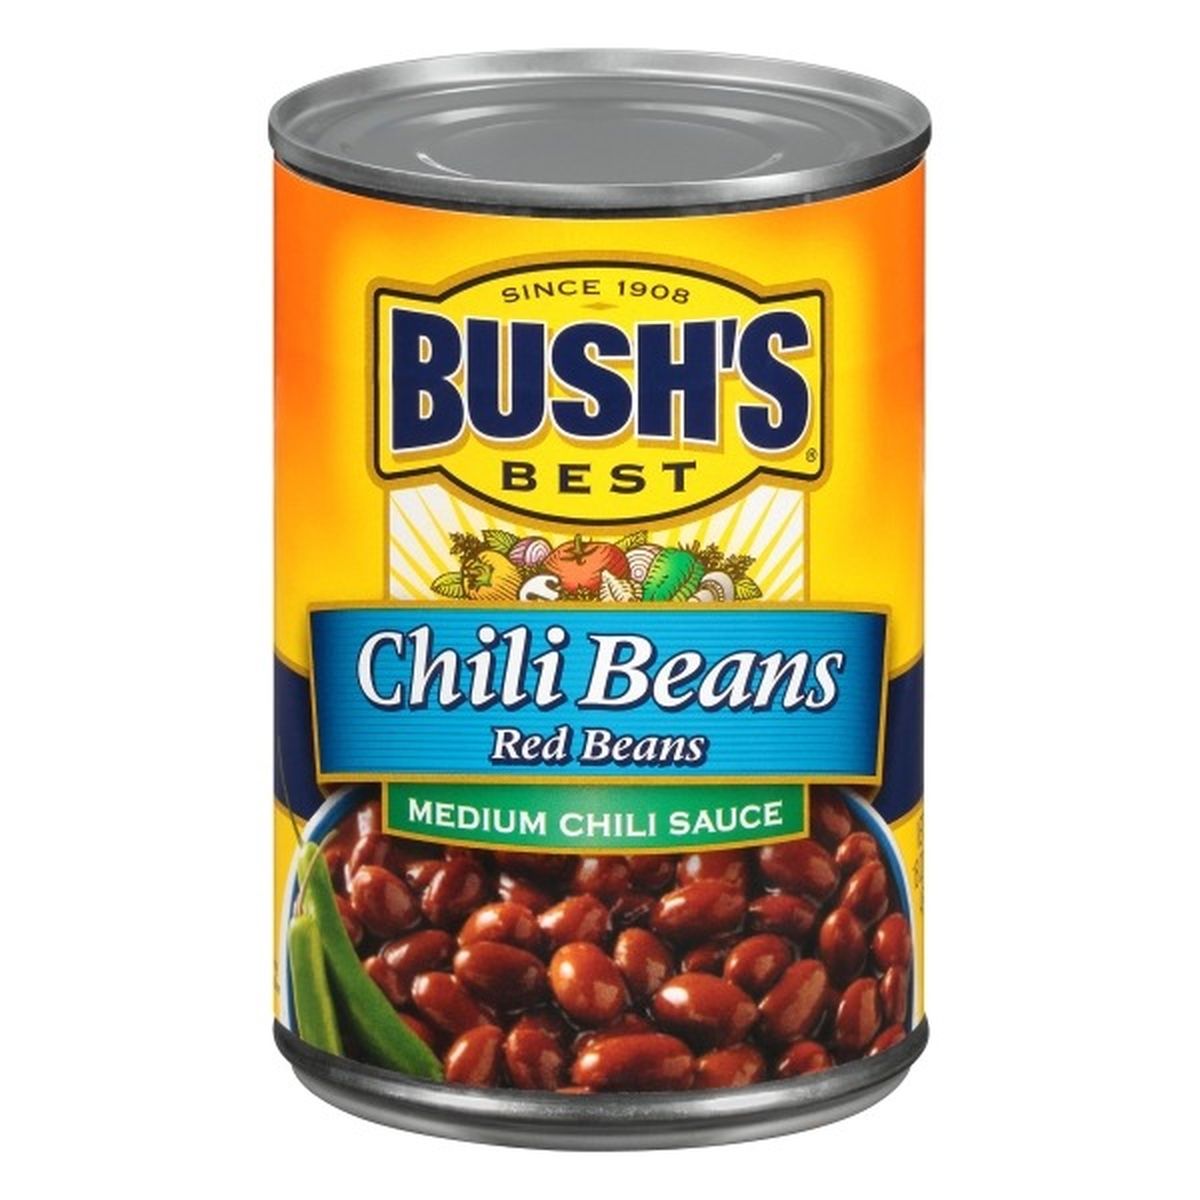 Calories in Bush's Best Red Beans, Chili Beans, Medium